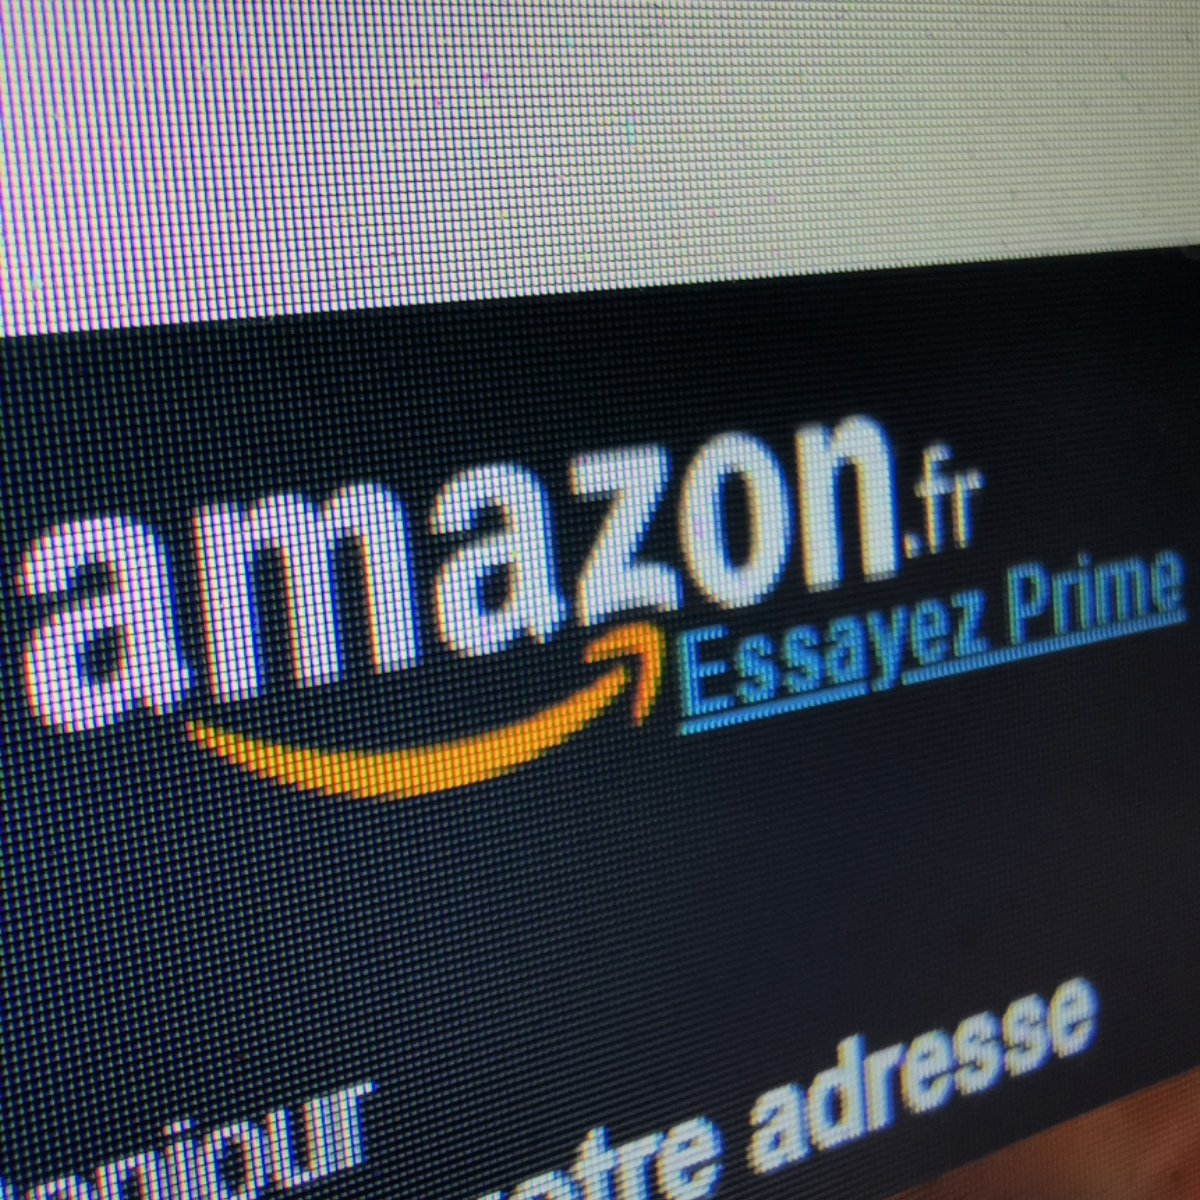 Amazon et les syndicats tombent d'accord : les entrepôts reprendront du service dès mardi